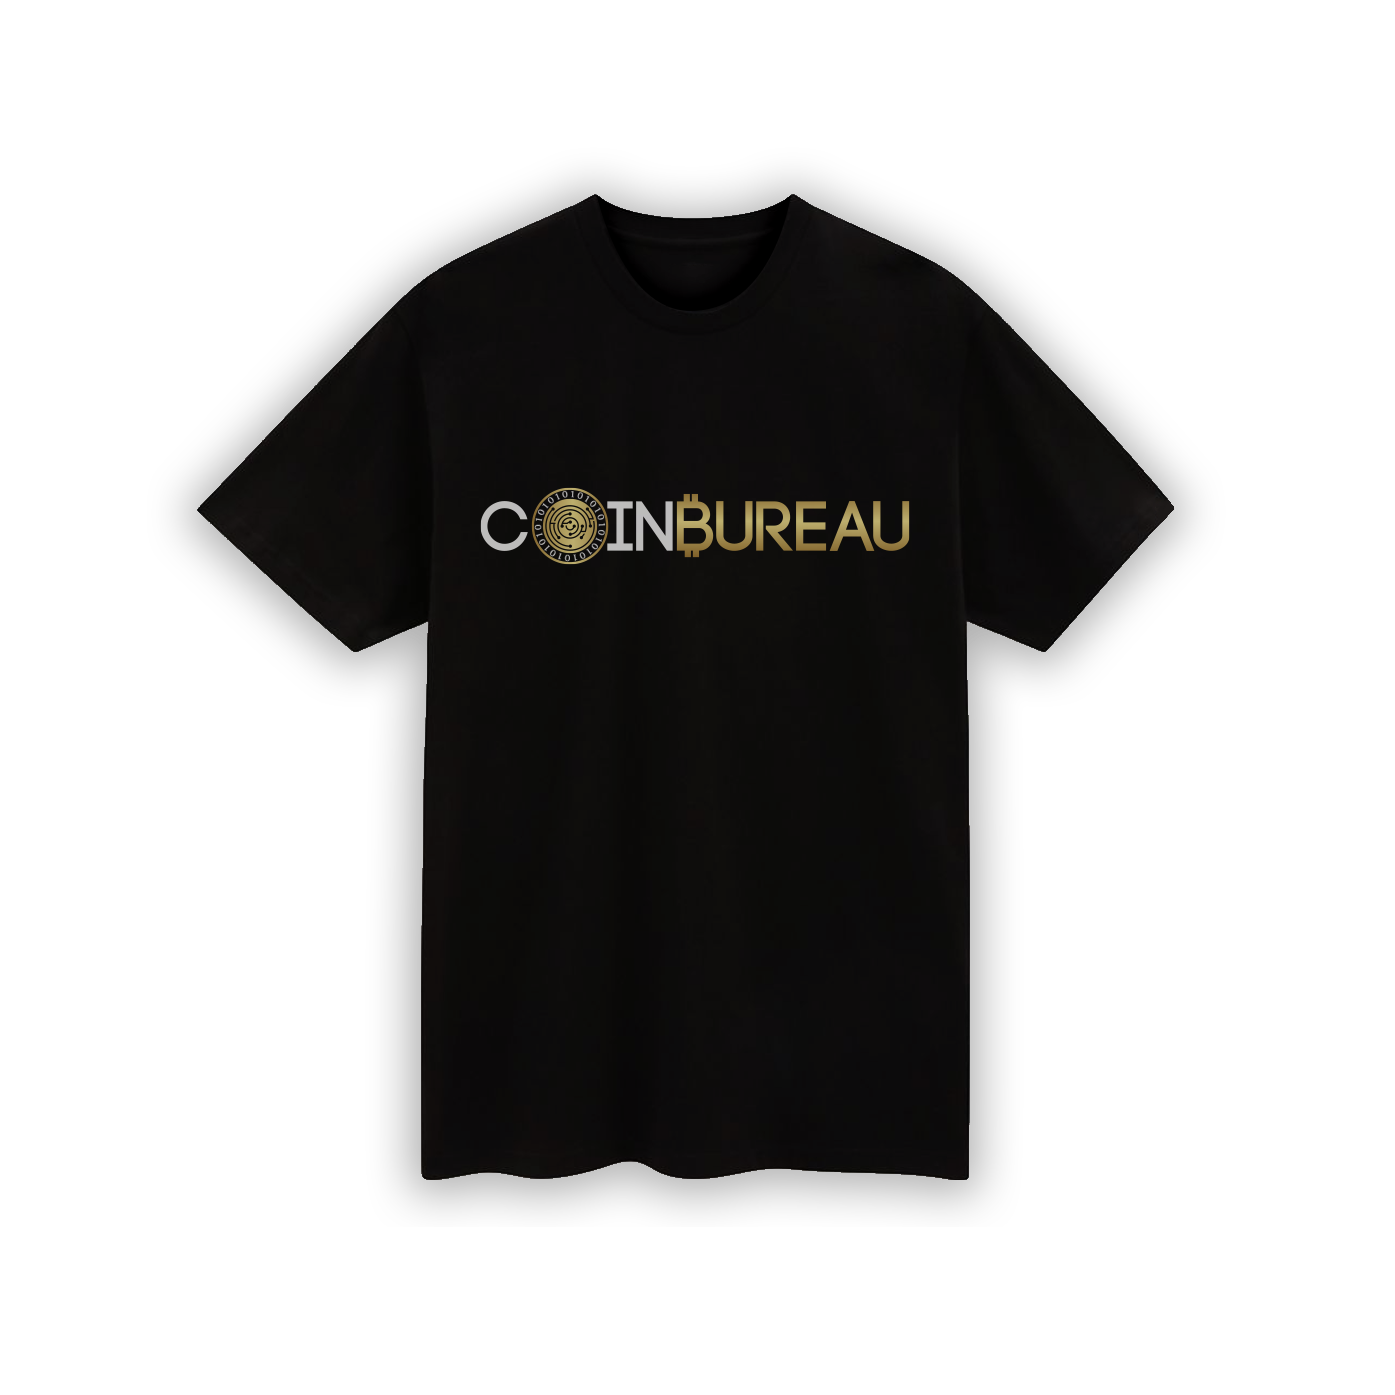 Coin Bureau T-Shirt